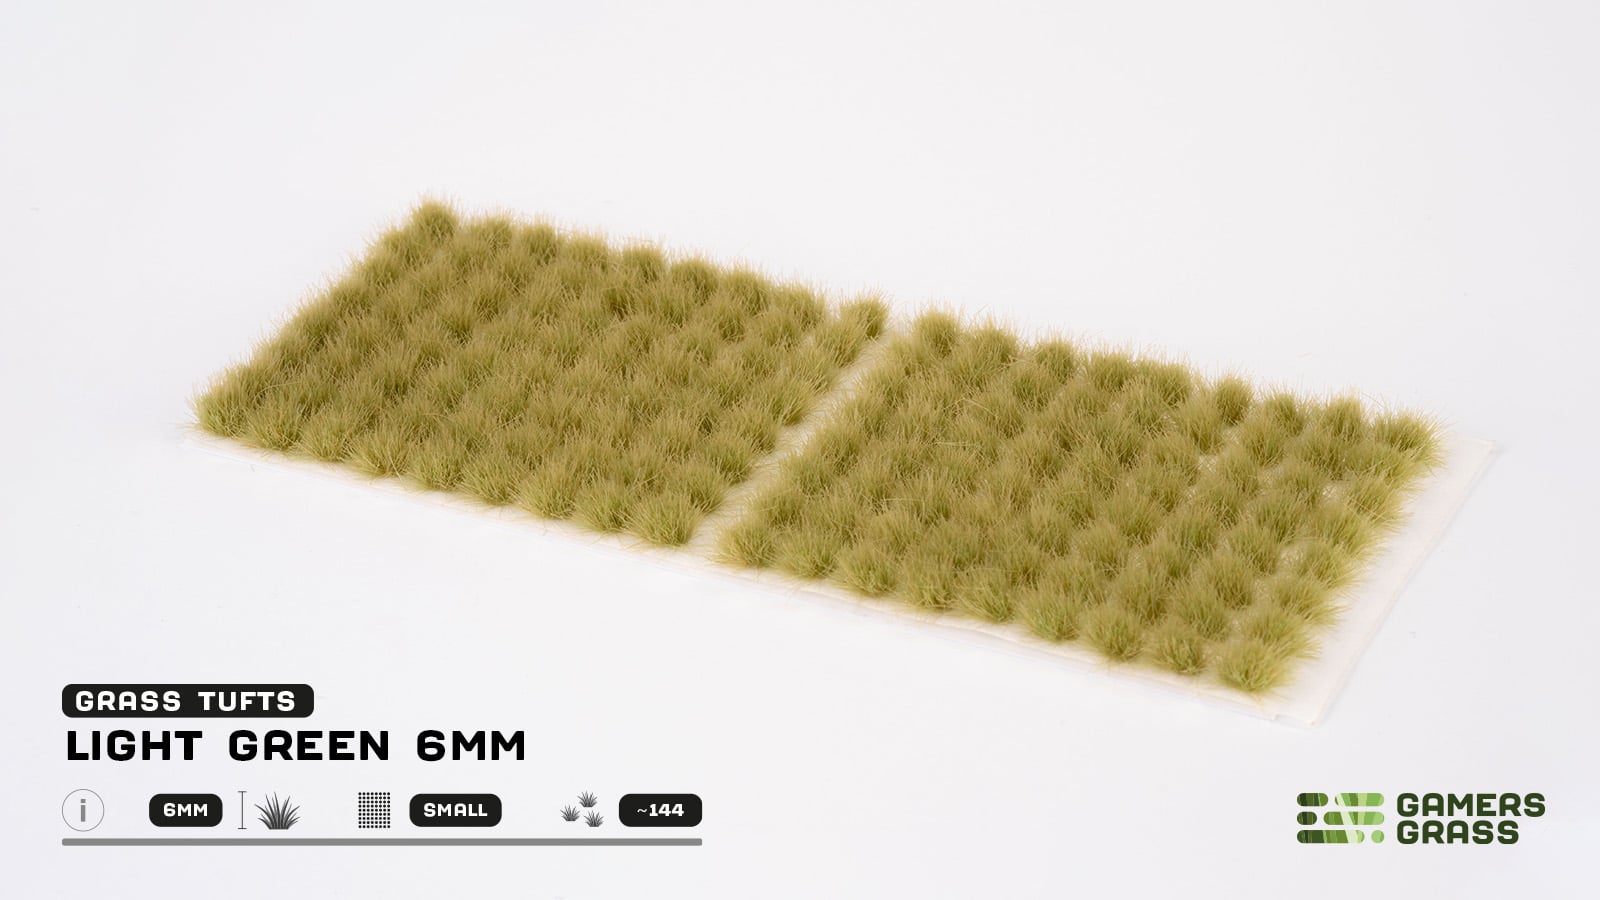 Light Green 6mm Tufts (Small) - Gamers Grass